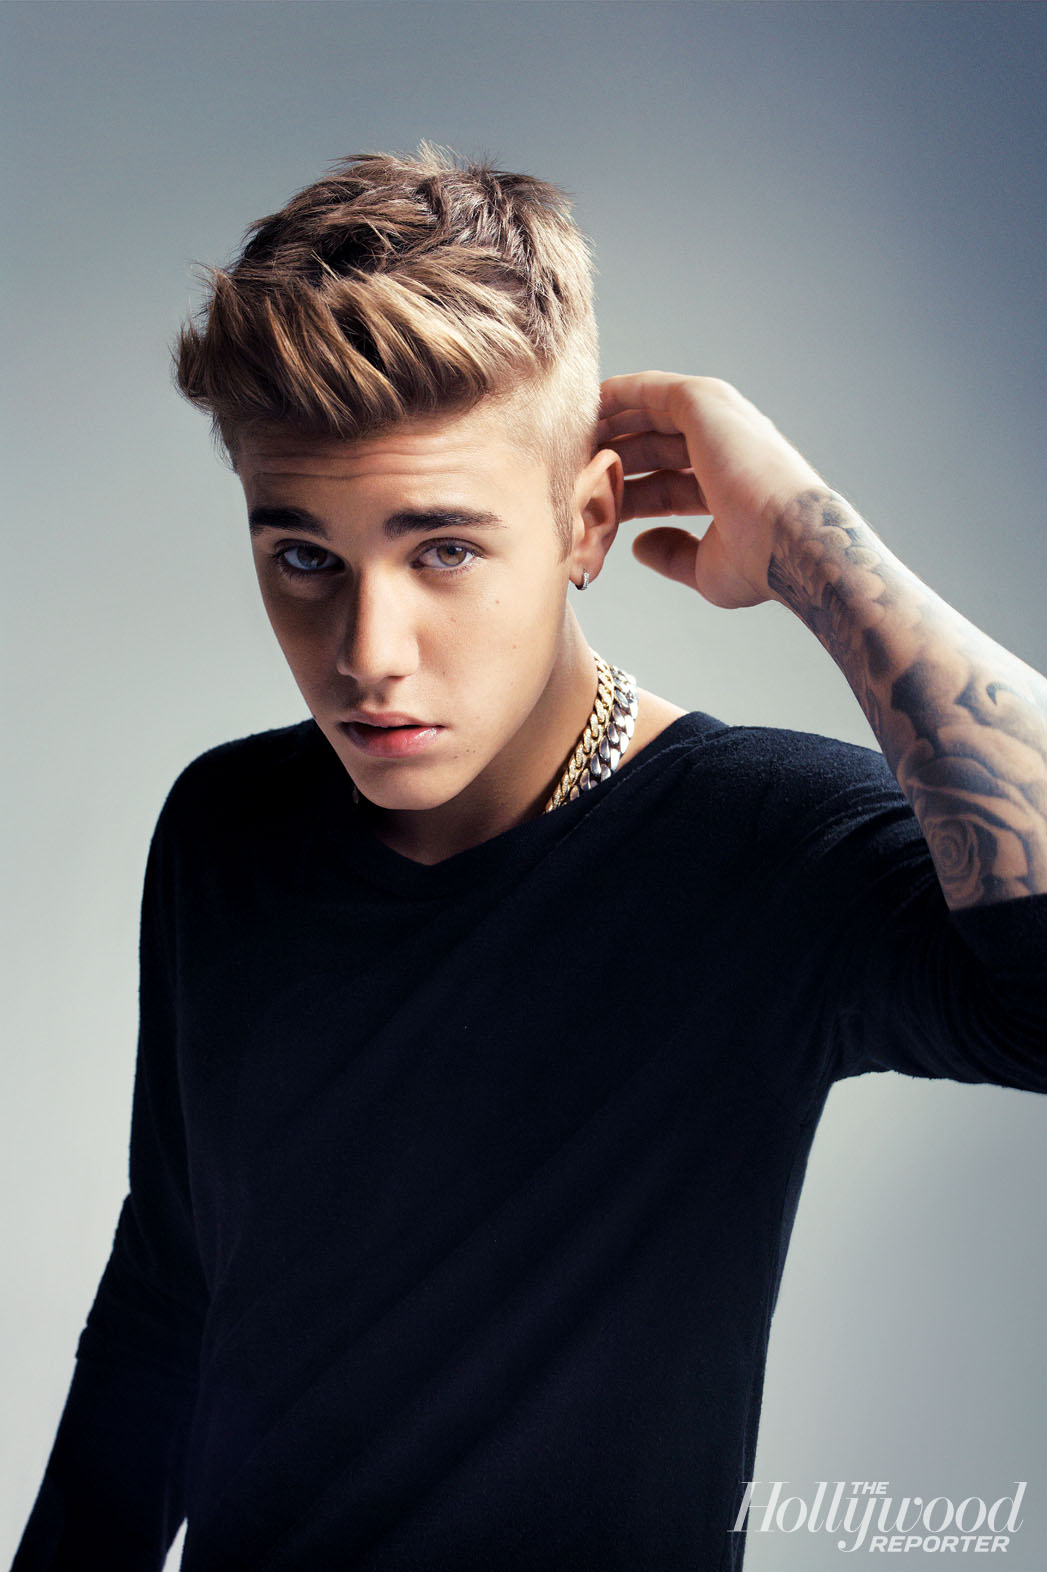 Justin Bieber Backgrounds, Compatible - PC, Mobile, Gadgets| 1047x1572 px